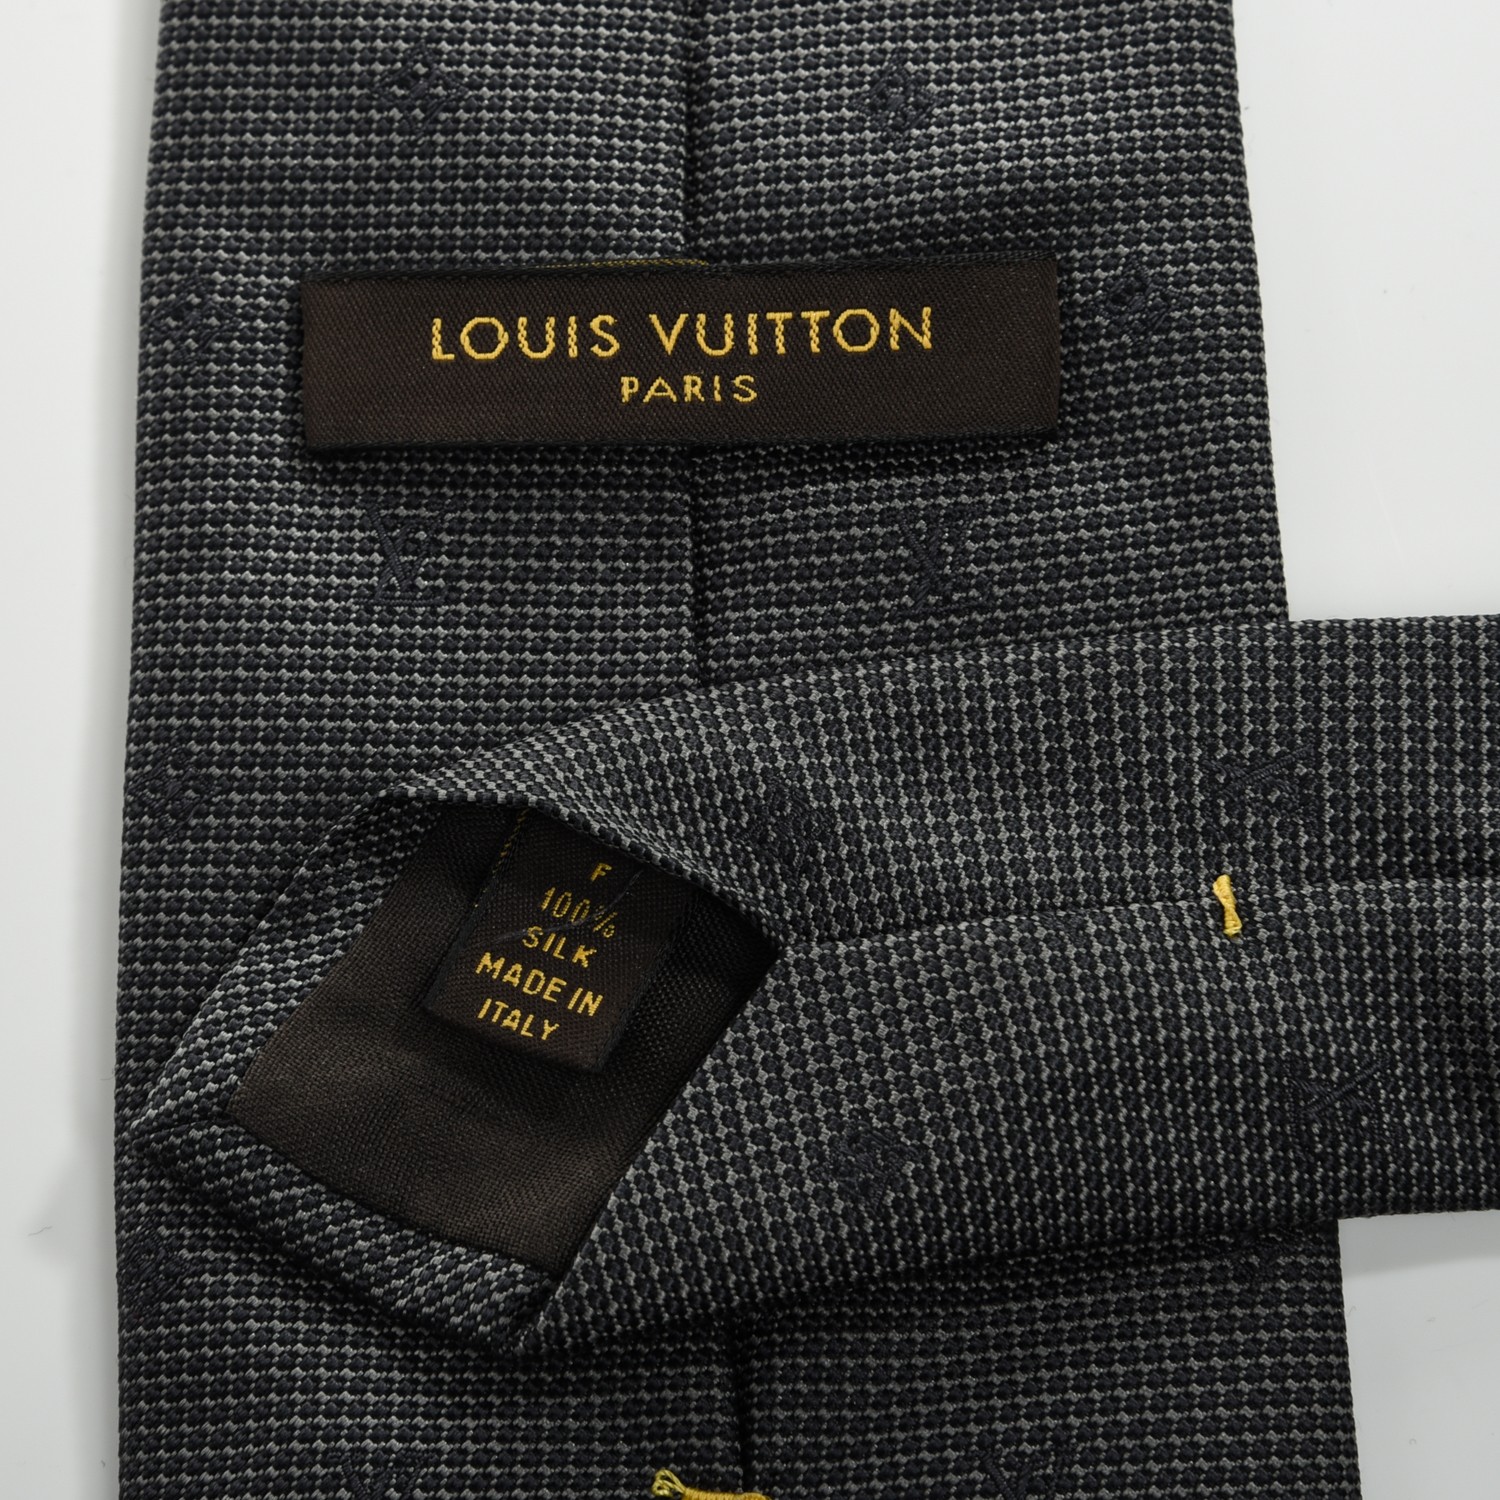 Louis Vuitton Tie Costco | semashow.com